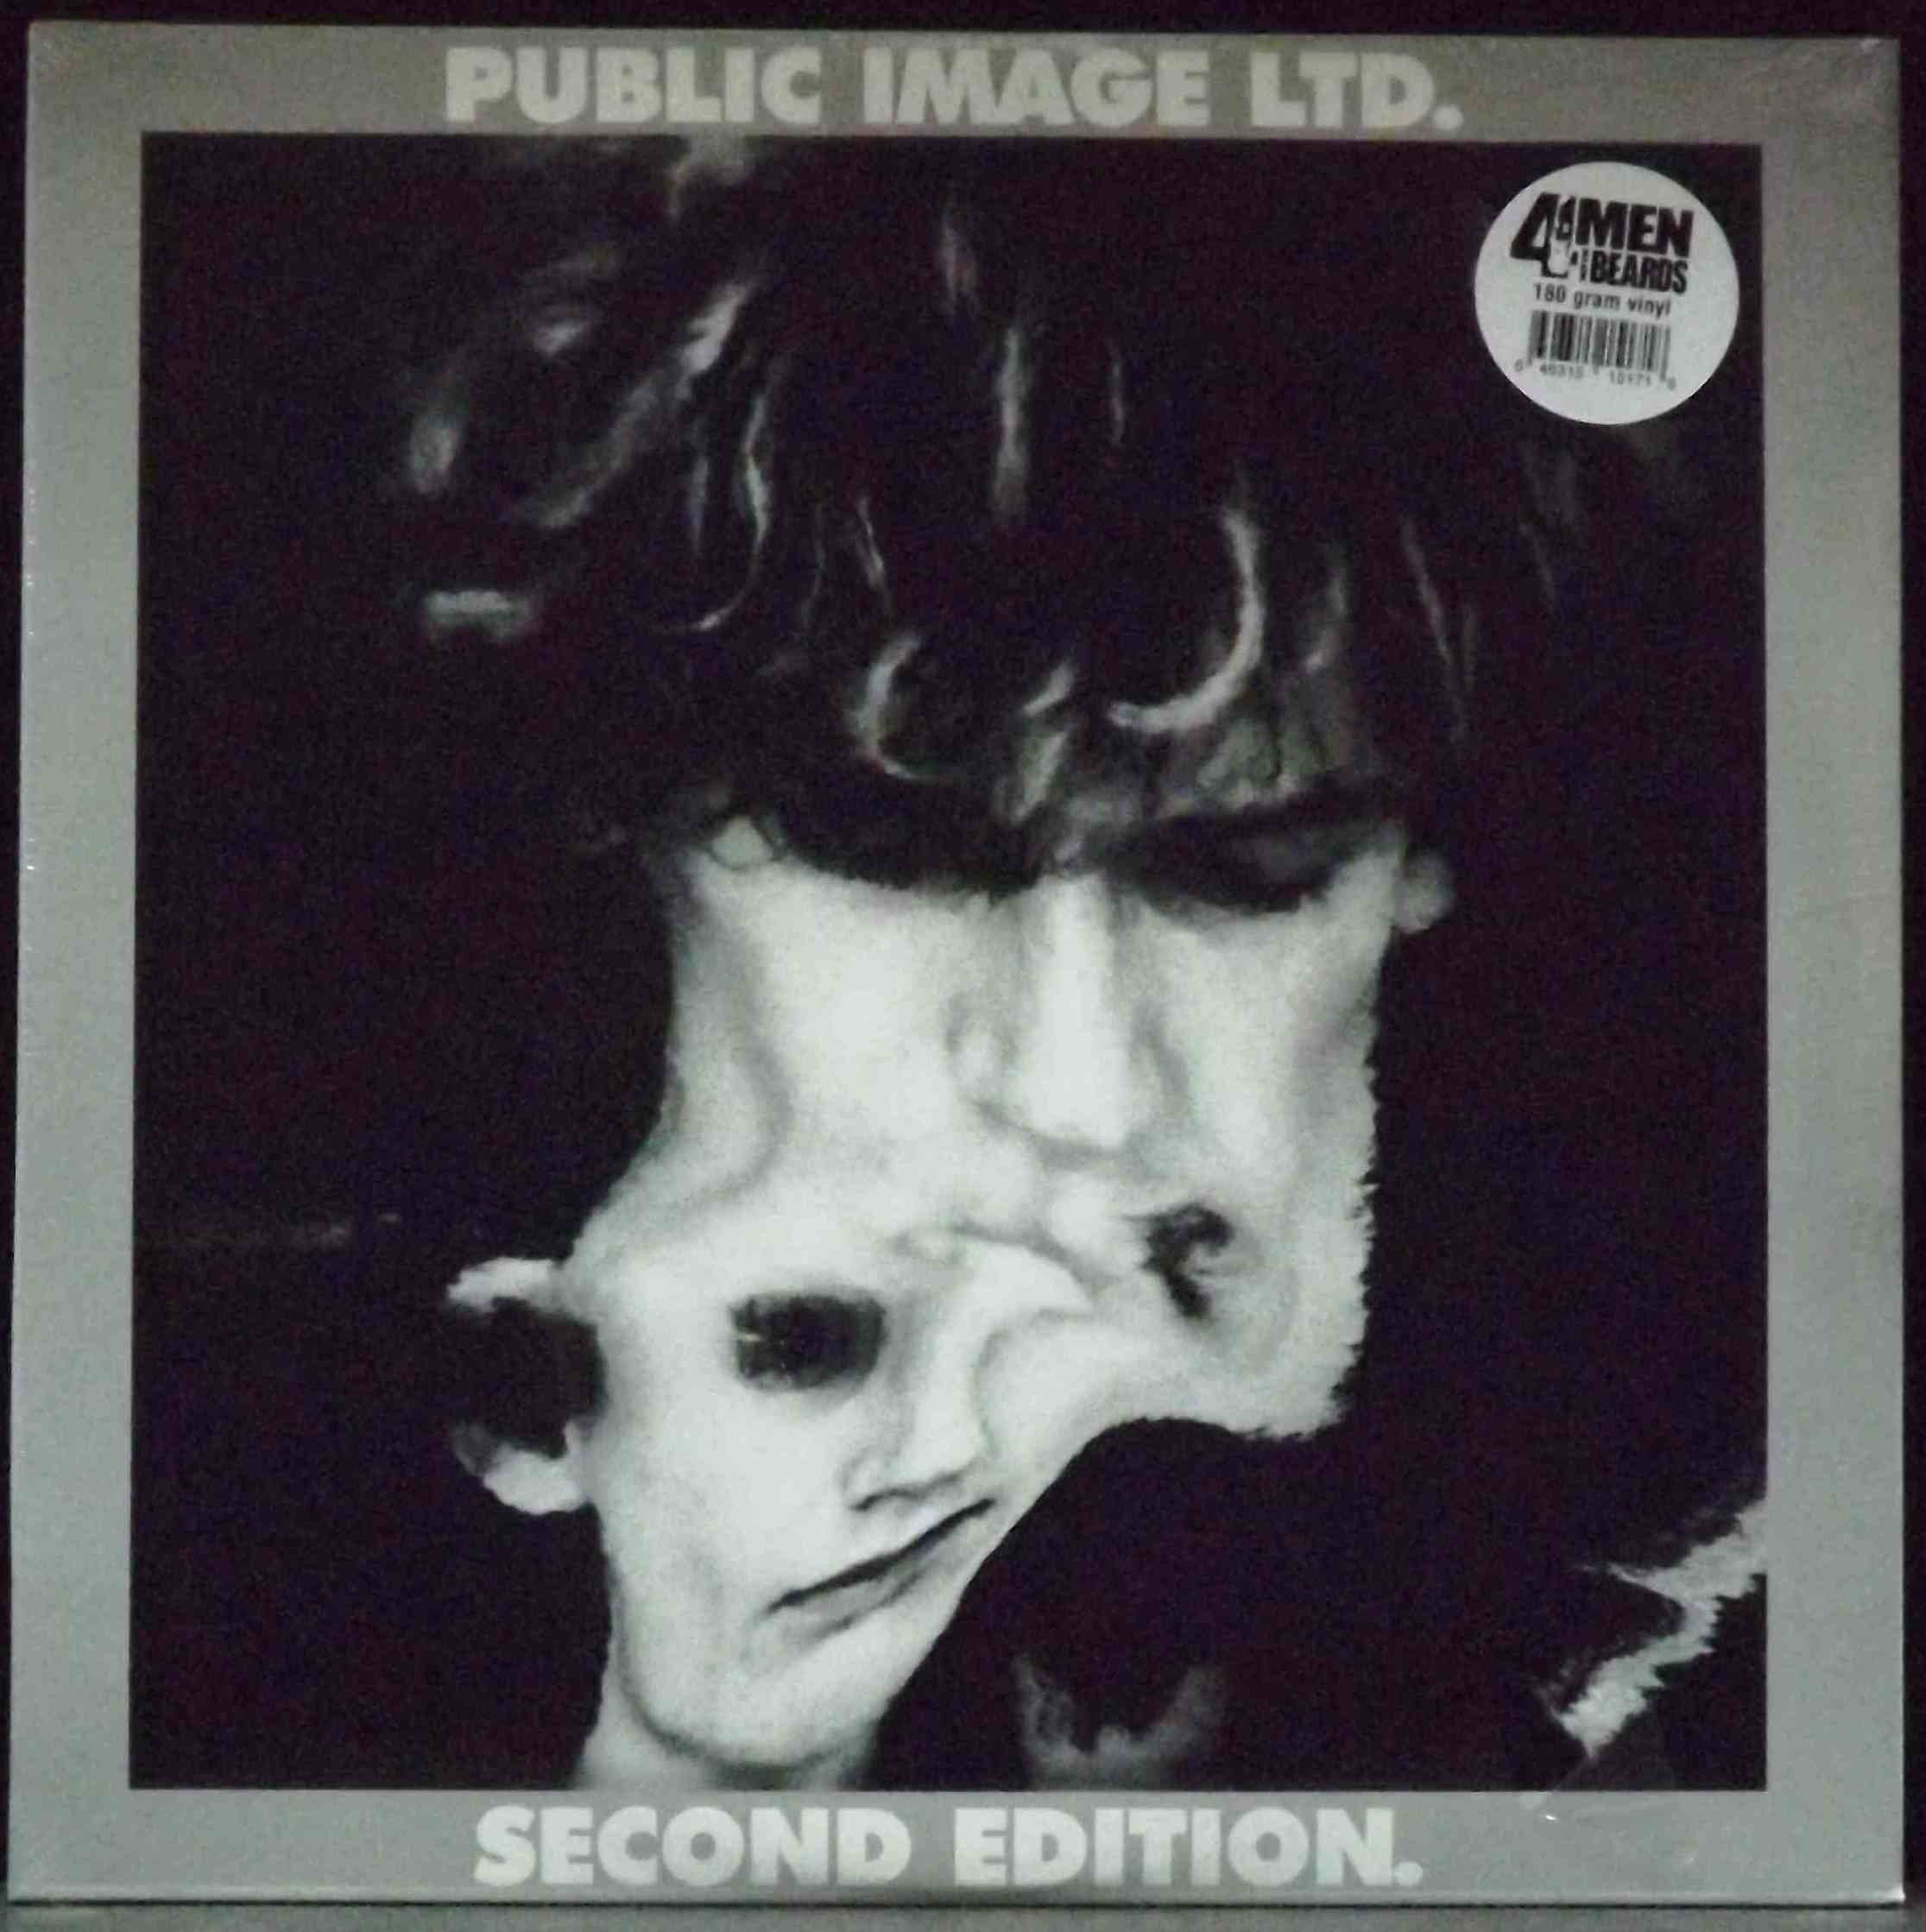 Public image ltd. Группа public image Ltd. Альбомы public image Ltd. Public image Ltd. "album". Public image Ltd. 1980.